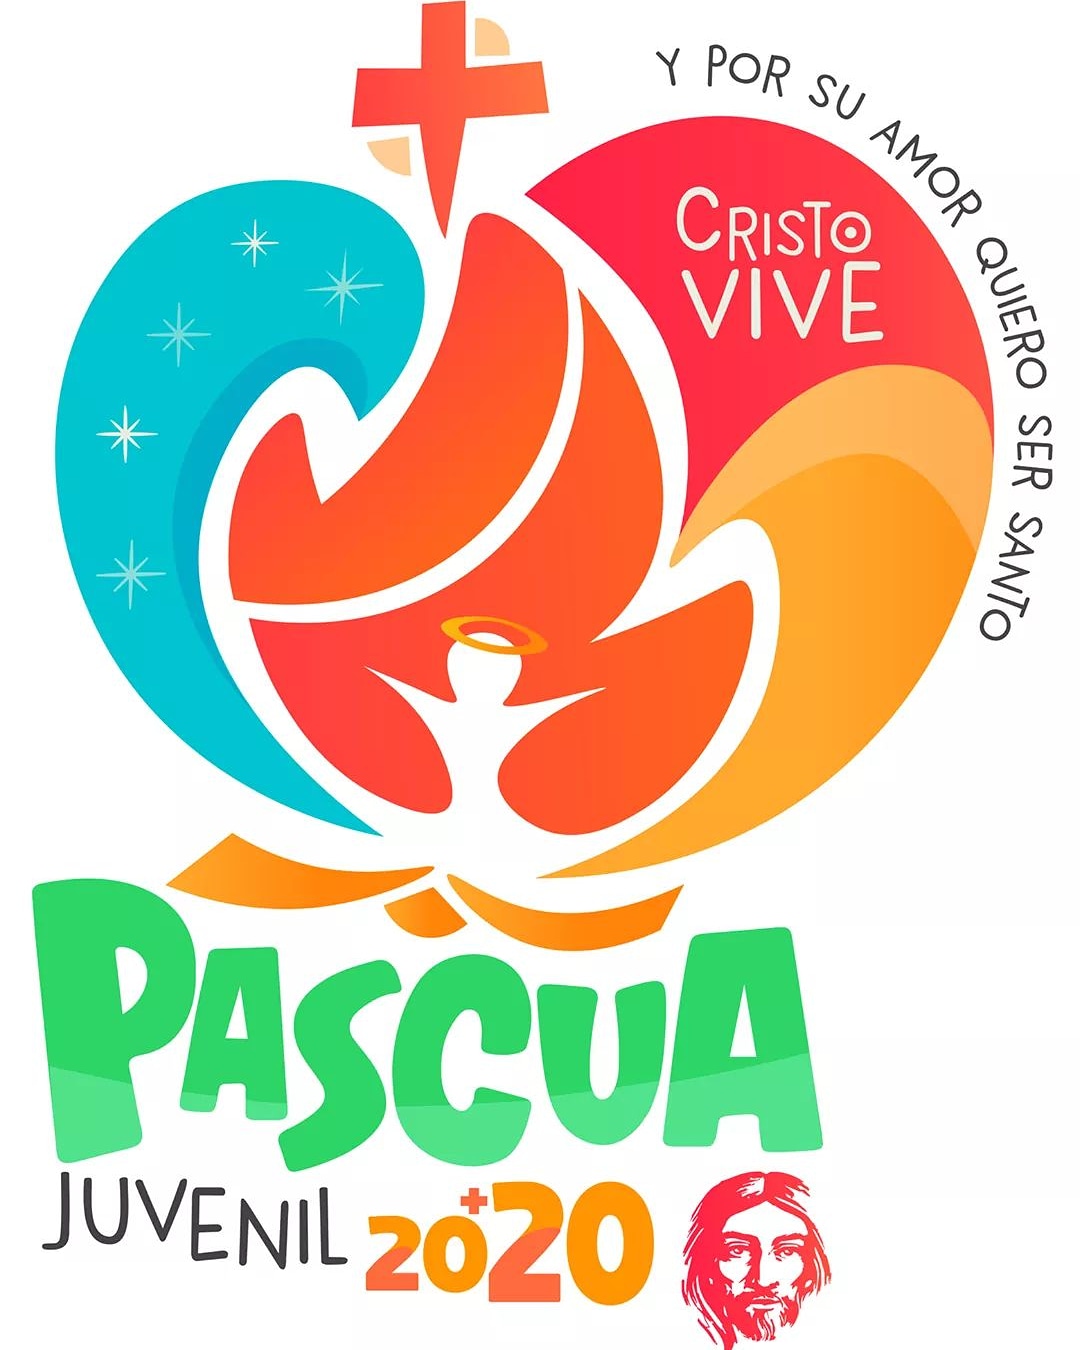 Juvenil Nacional on Twitter: "Logotipo #PascuaJuvenil2020 #CristoVive #40Años https://t.co/qYuJVh73B8" / Twitter